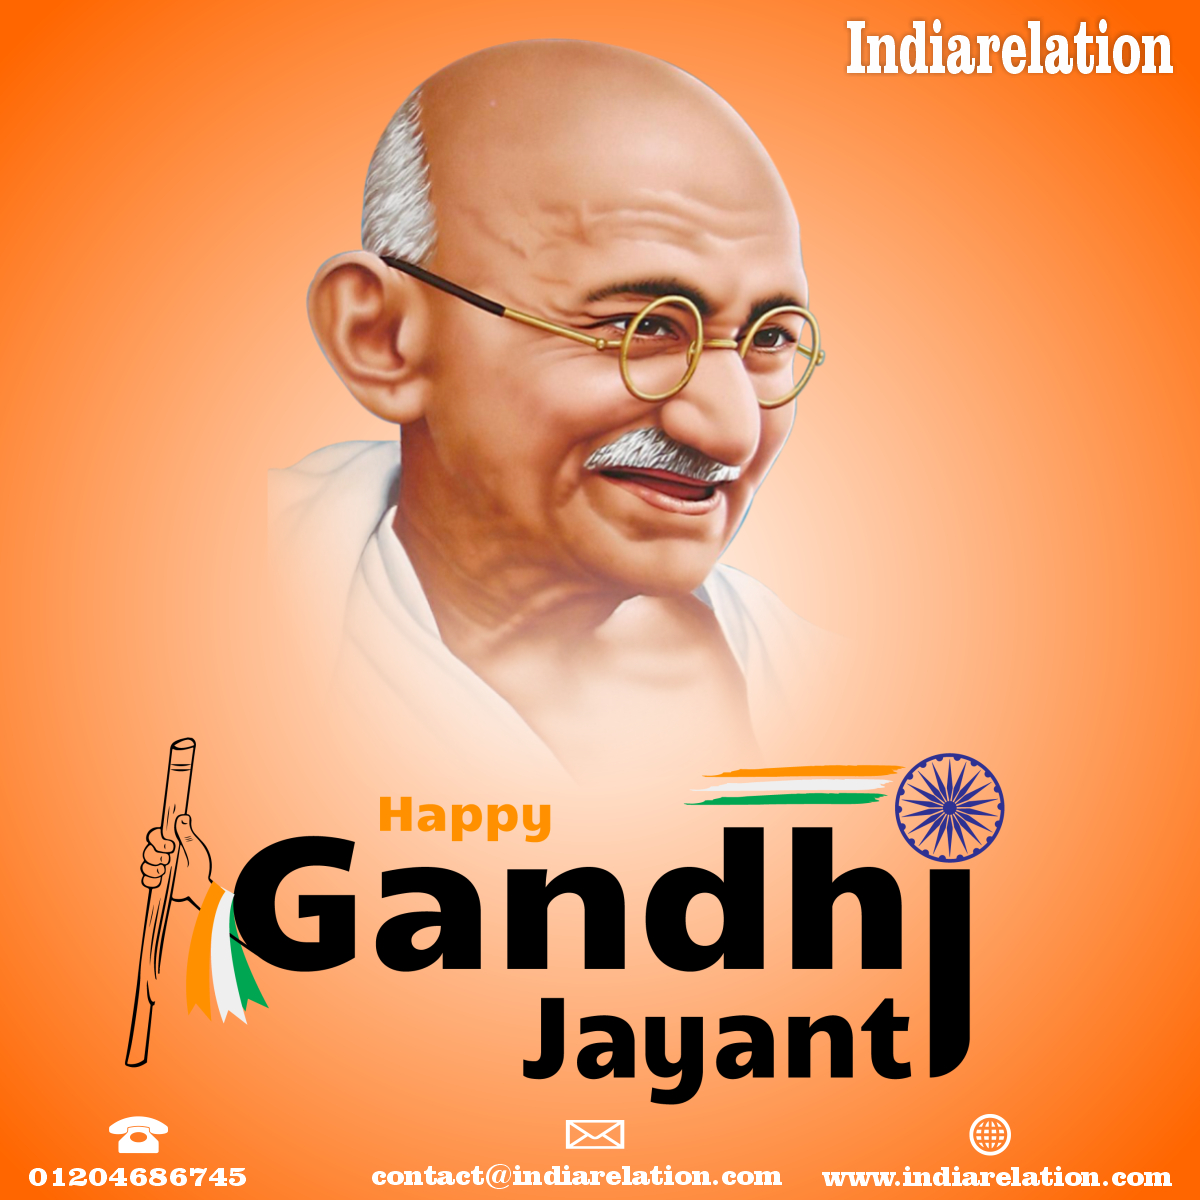 Wish You All Happy Gandhi Jayanti

#gandhijayanti #2ndoctober #gandhijayantispecial #gandhijayanti2023 #gandhijayantiwishes #bapu #mahatmagandhi #gandhiji #indiarelation